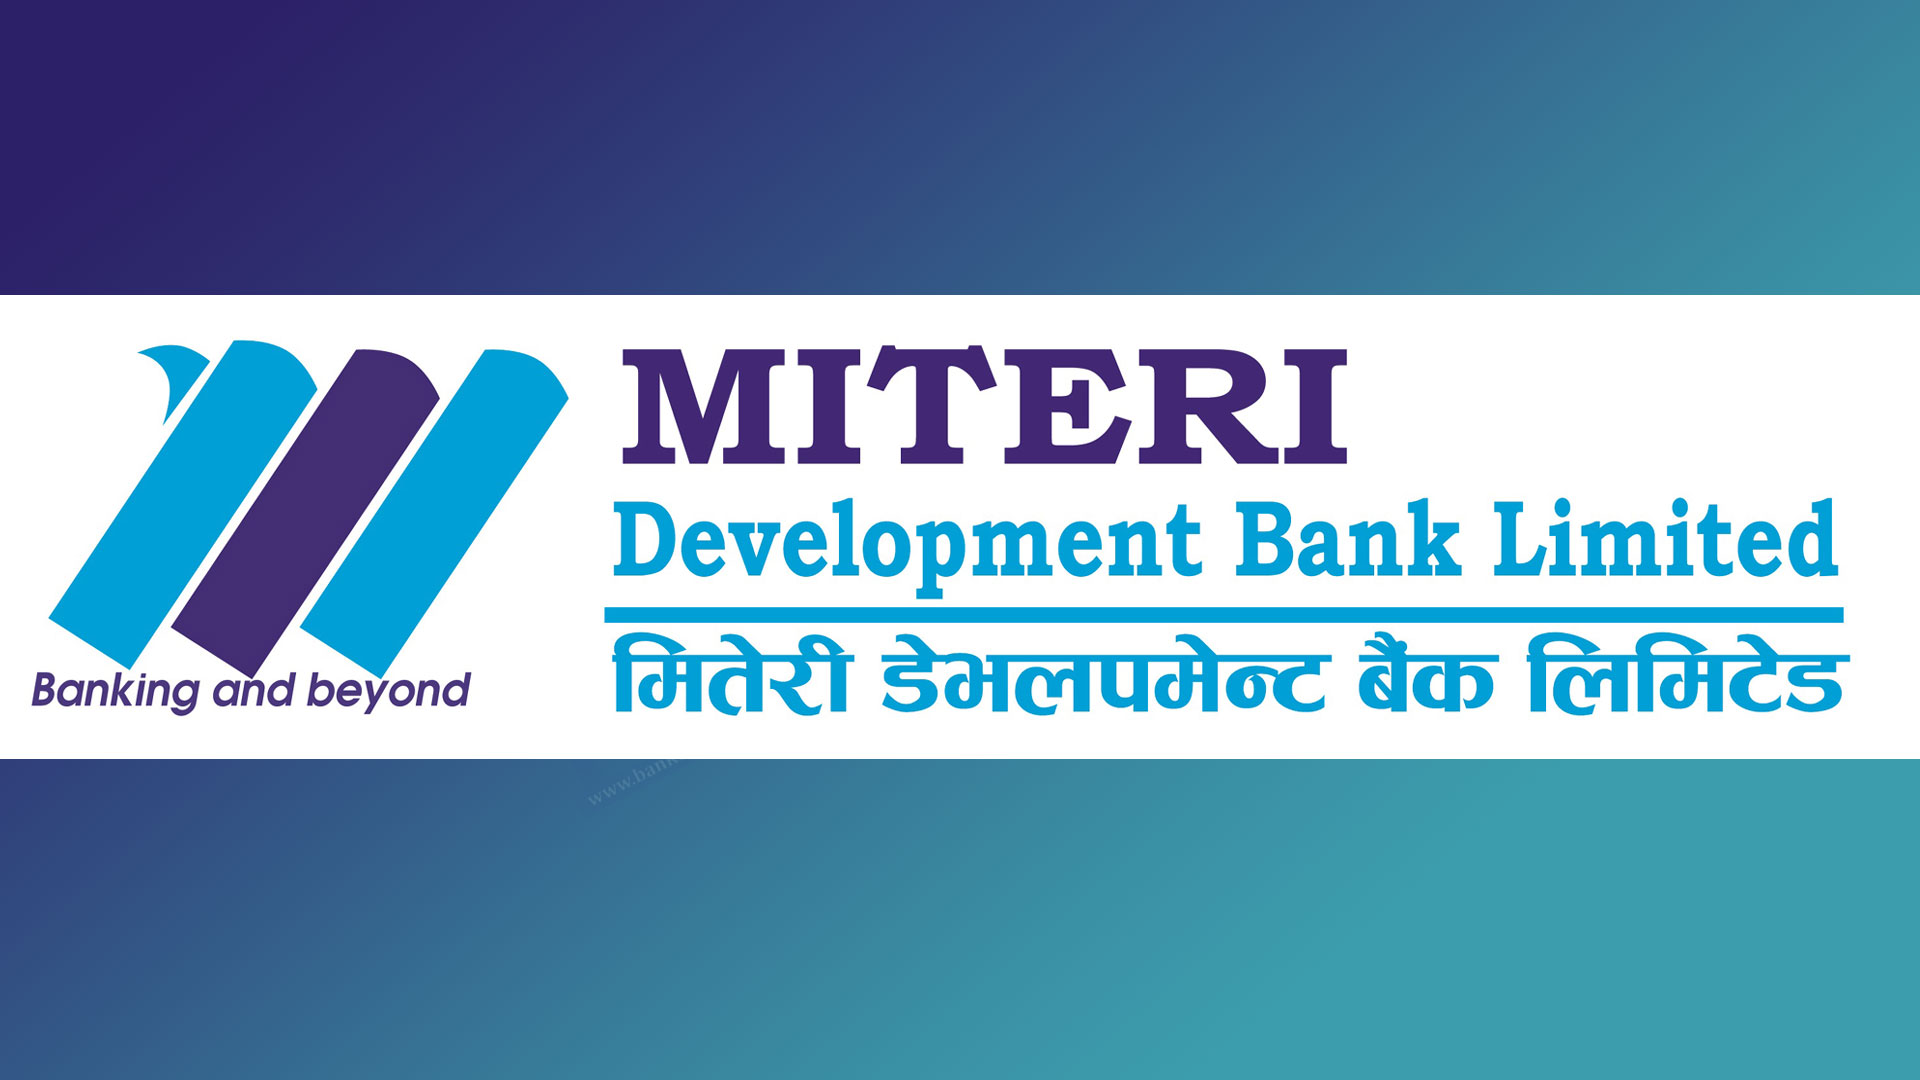 miteri development bank